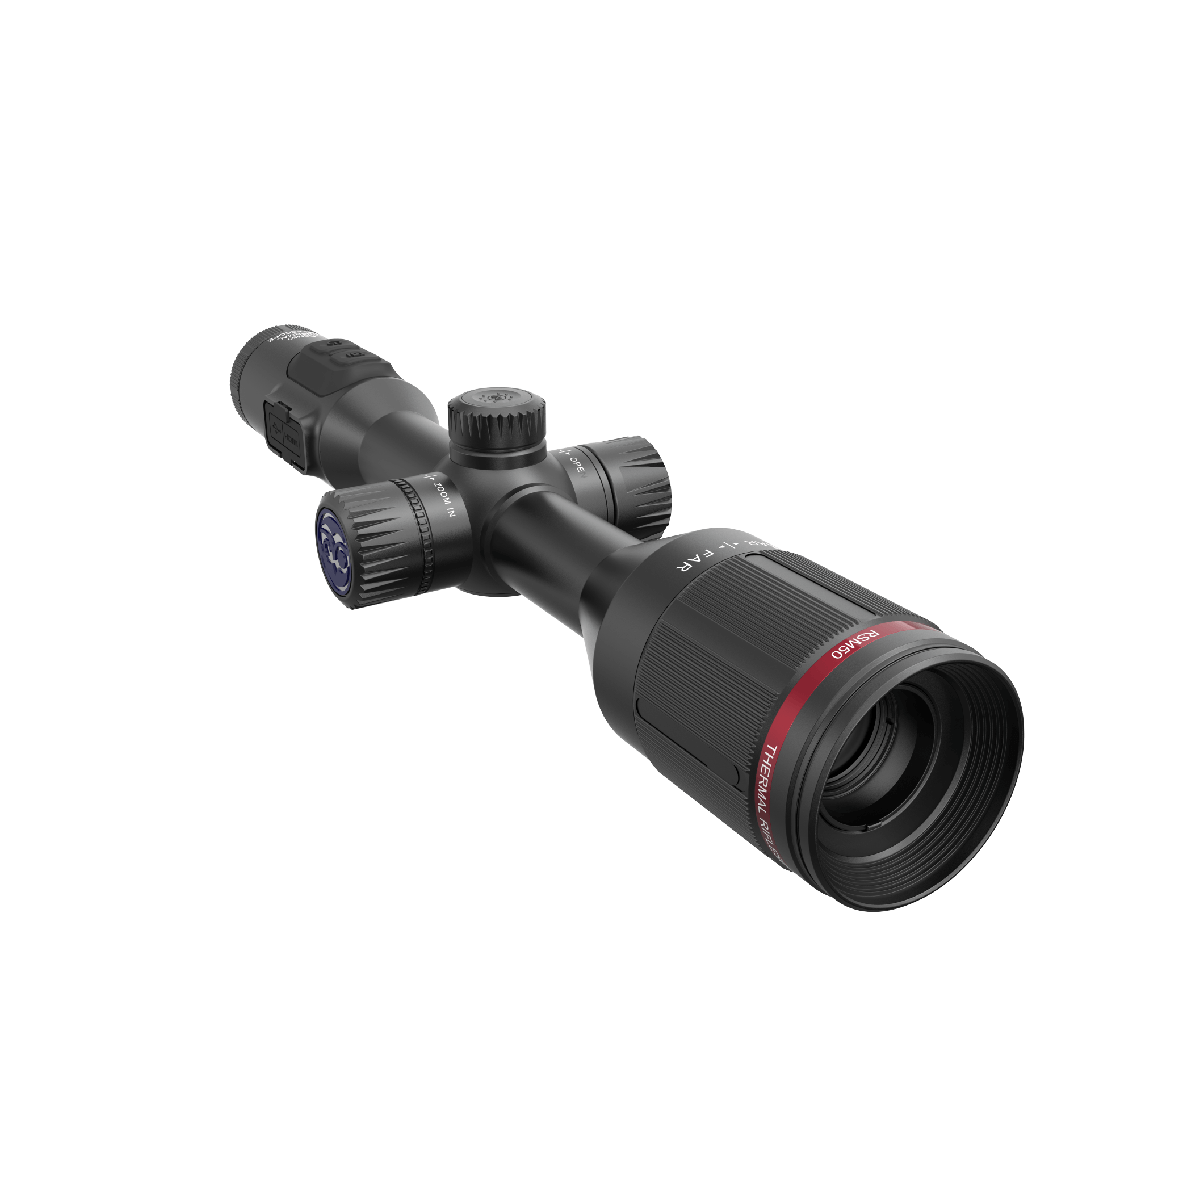 Owlset RSM50 3.2-12.8x50 Thermal Riflescope